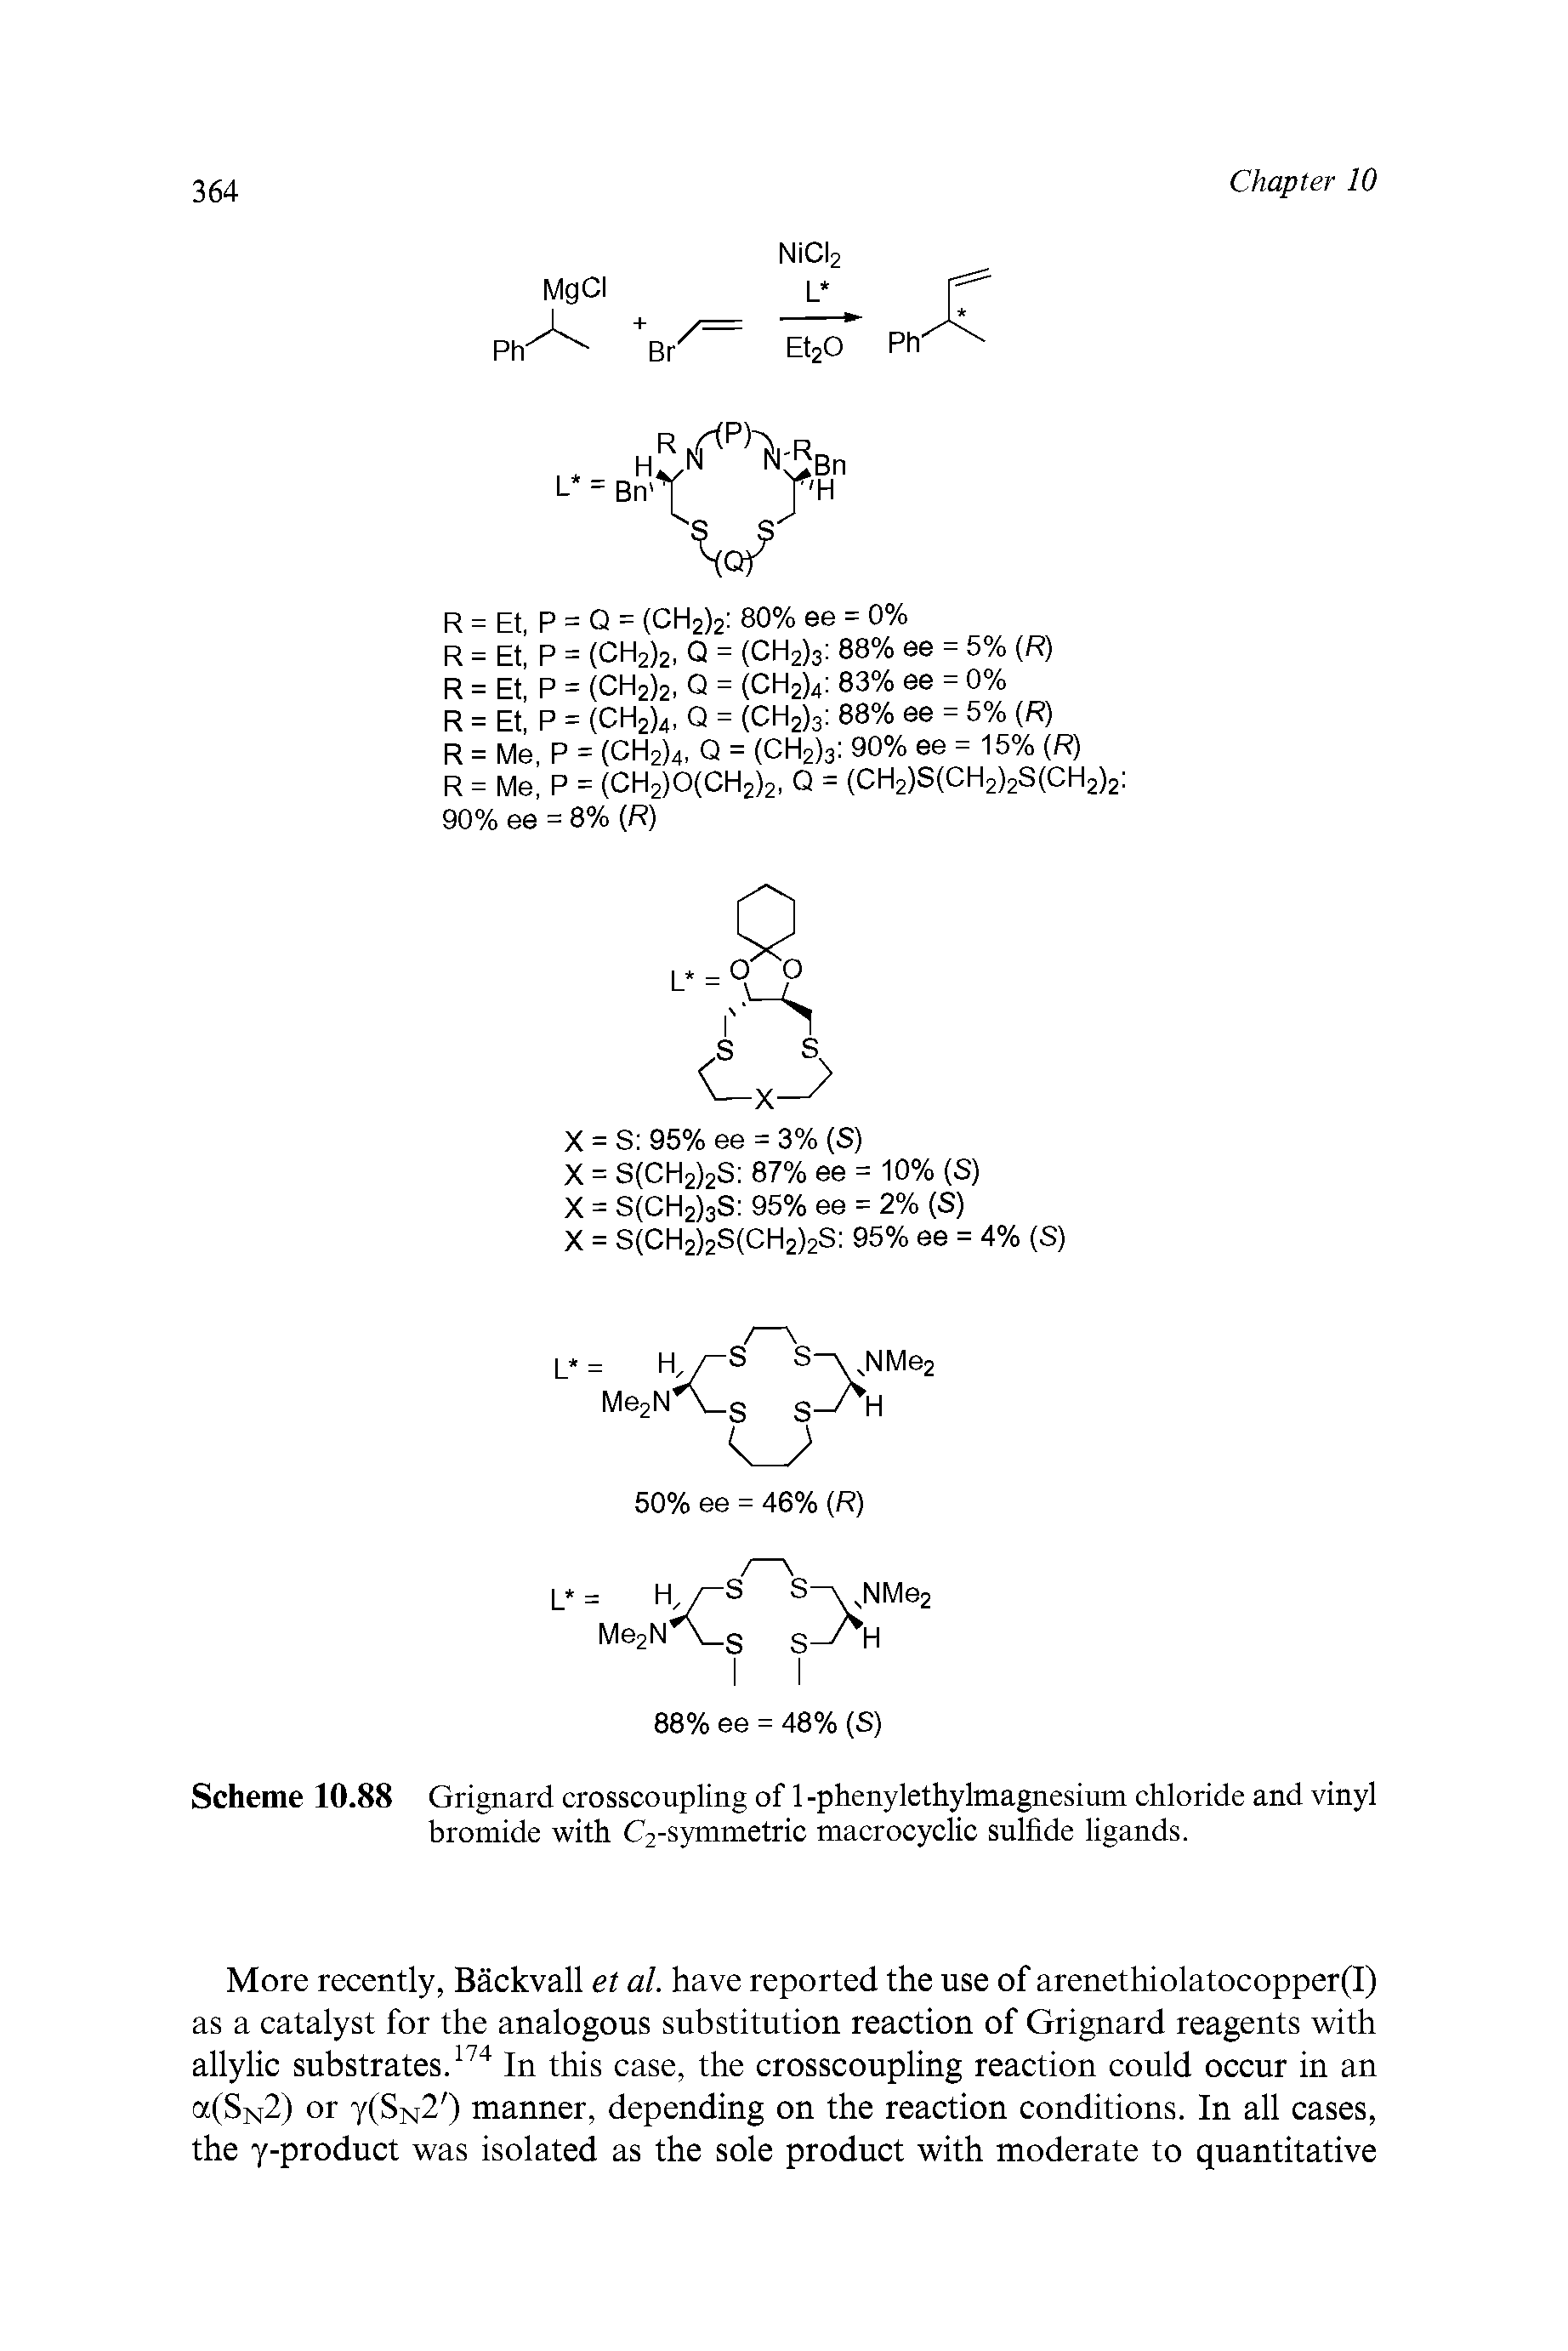 Scheme 10.88 Grignard crosscoupling of 1-phenylethylmagnesium chloride and vinyl bromide with C2-symmetric macrocyclic sulfide ligands.